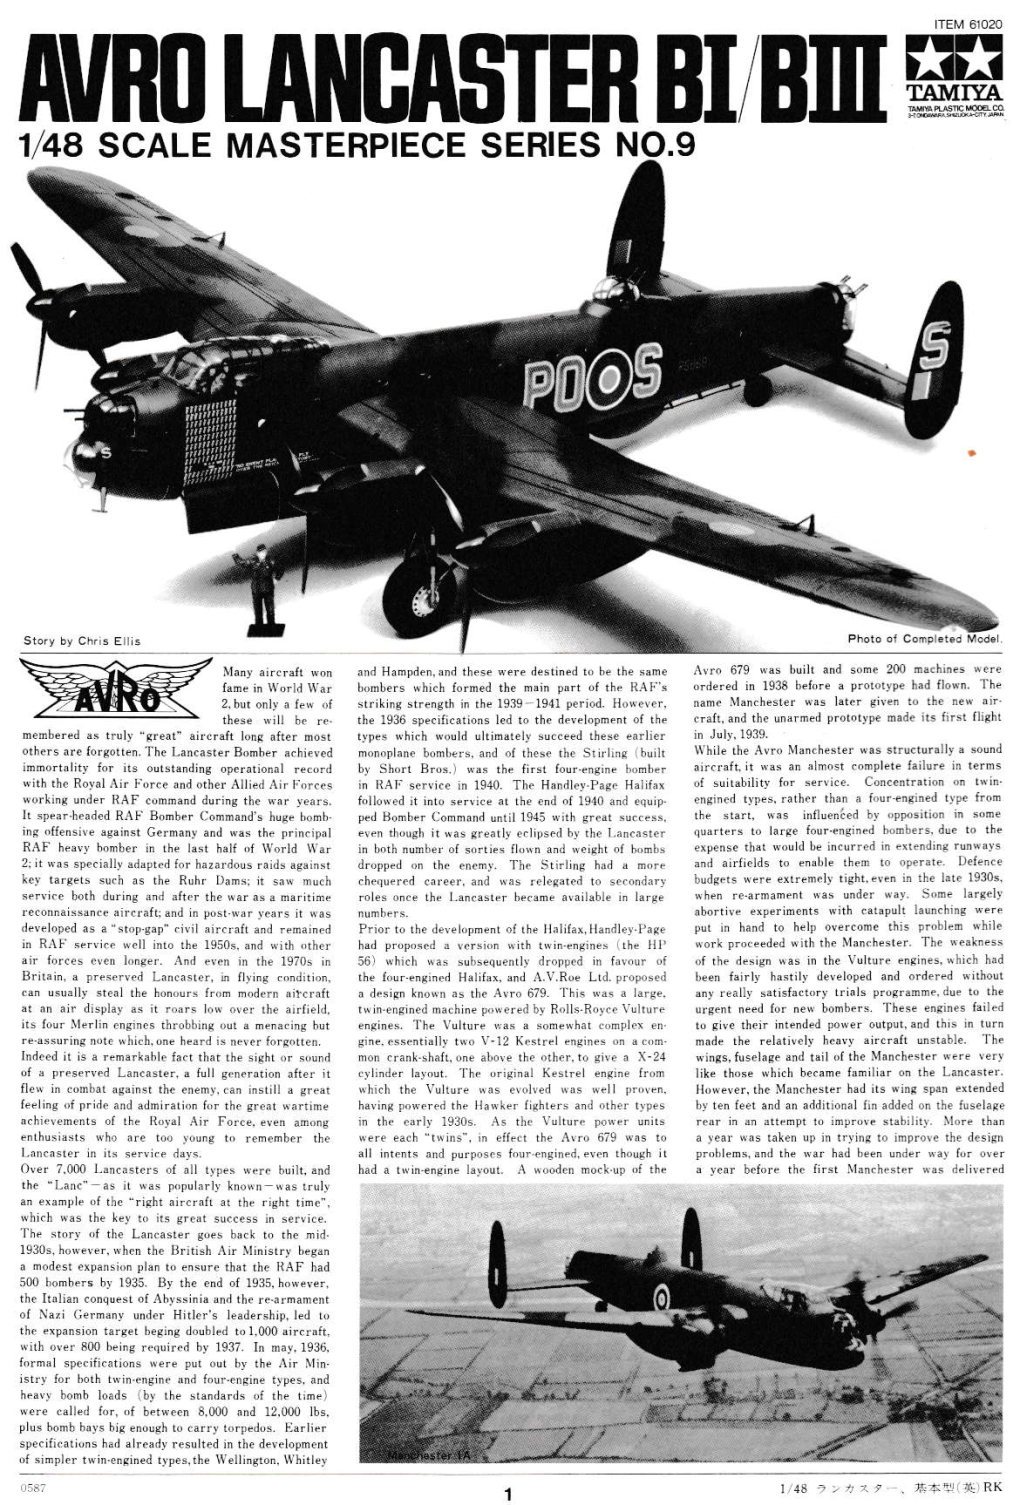 300061020 Avro Lancaster BI-BIII